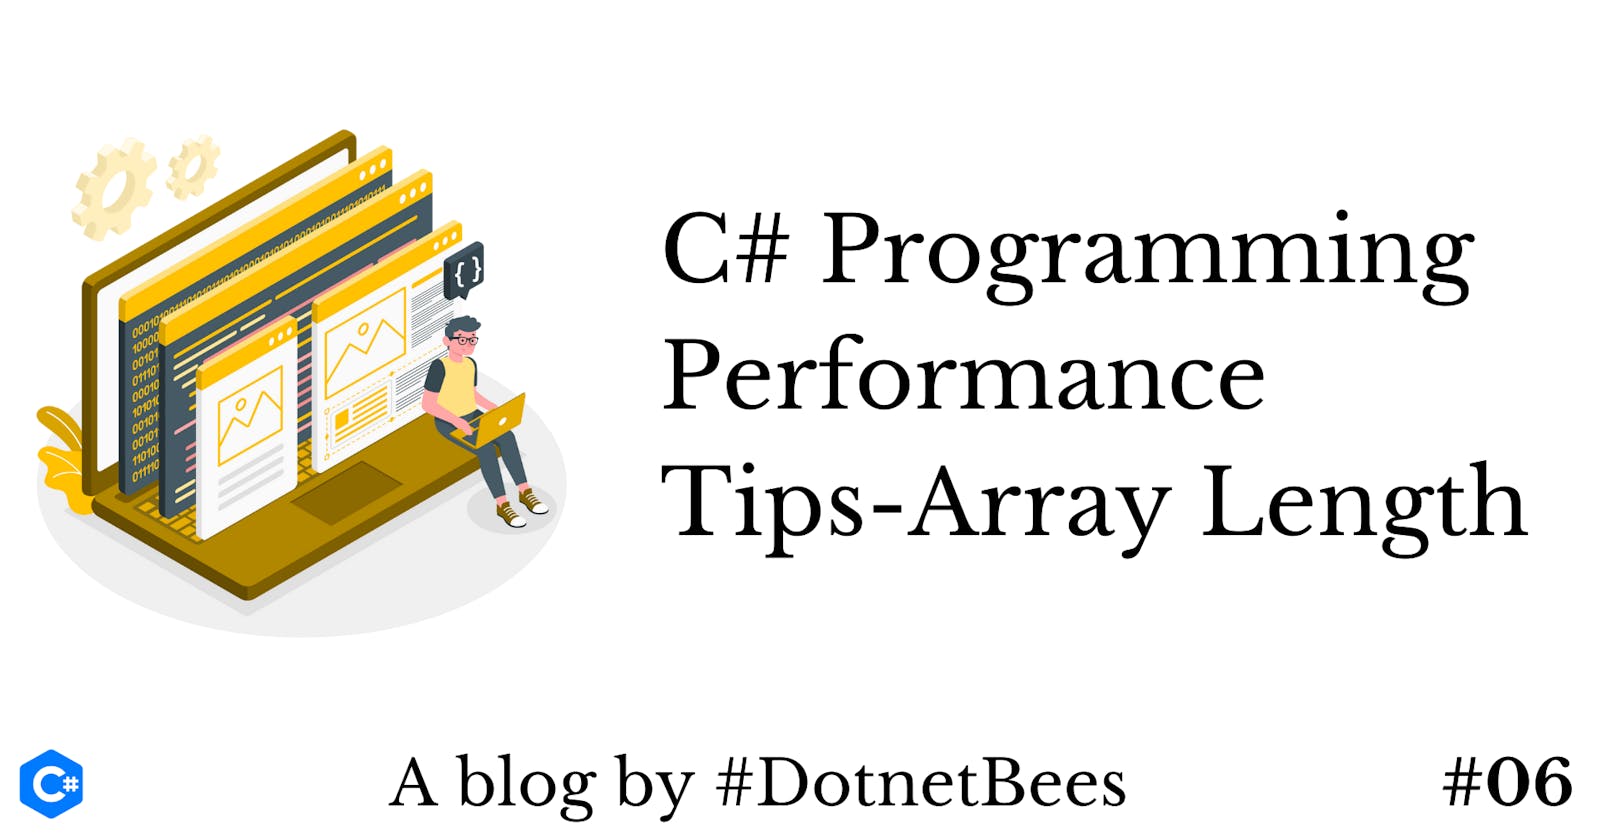 C# Programming Performance Tips - Array Length